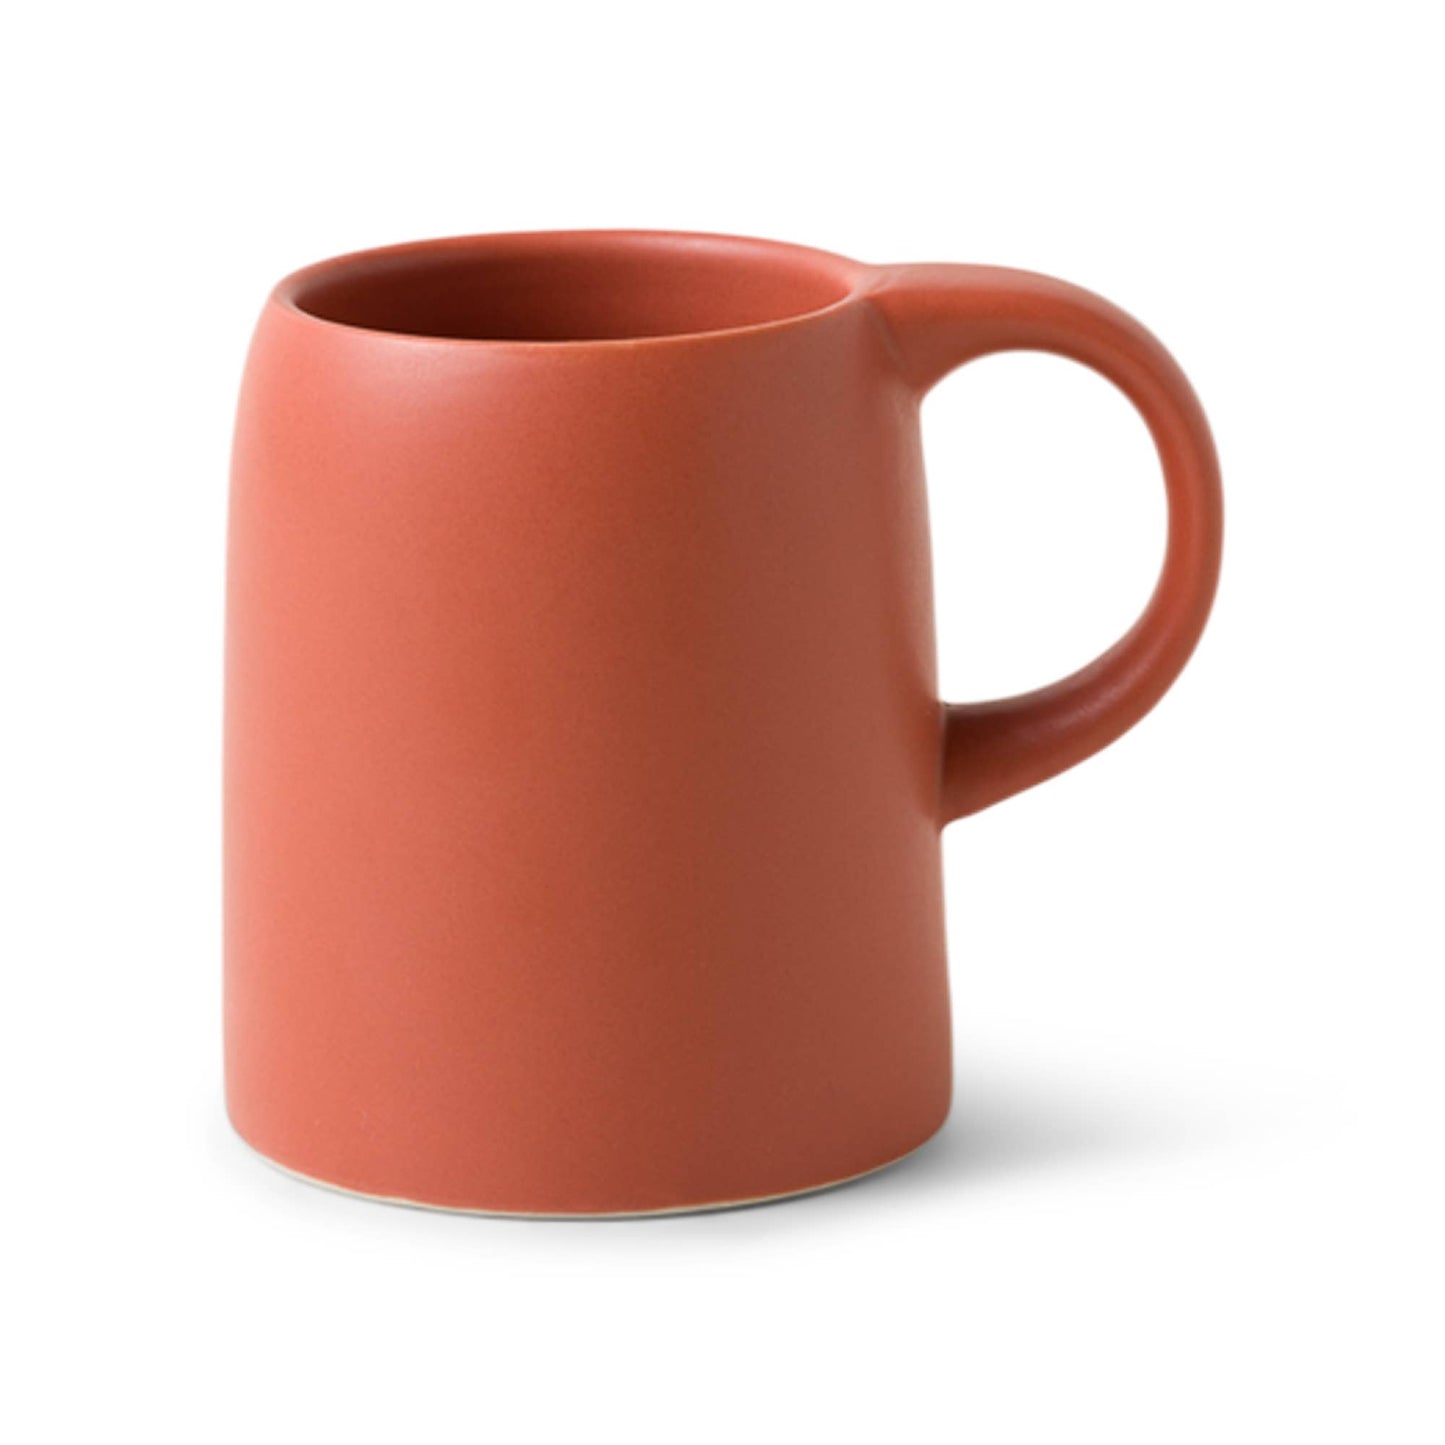 Ceramic Tea Infuser Mug - Terracotta, 11 oz